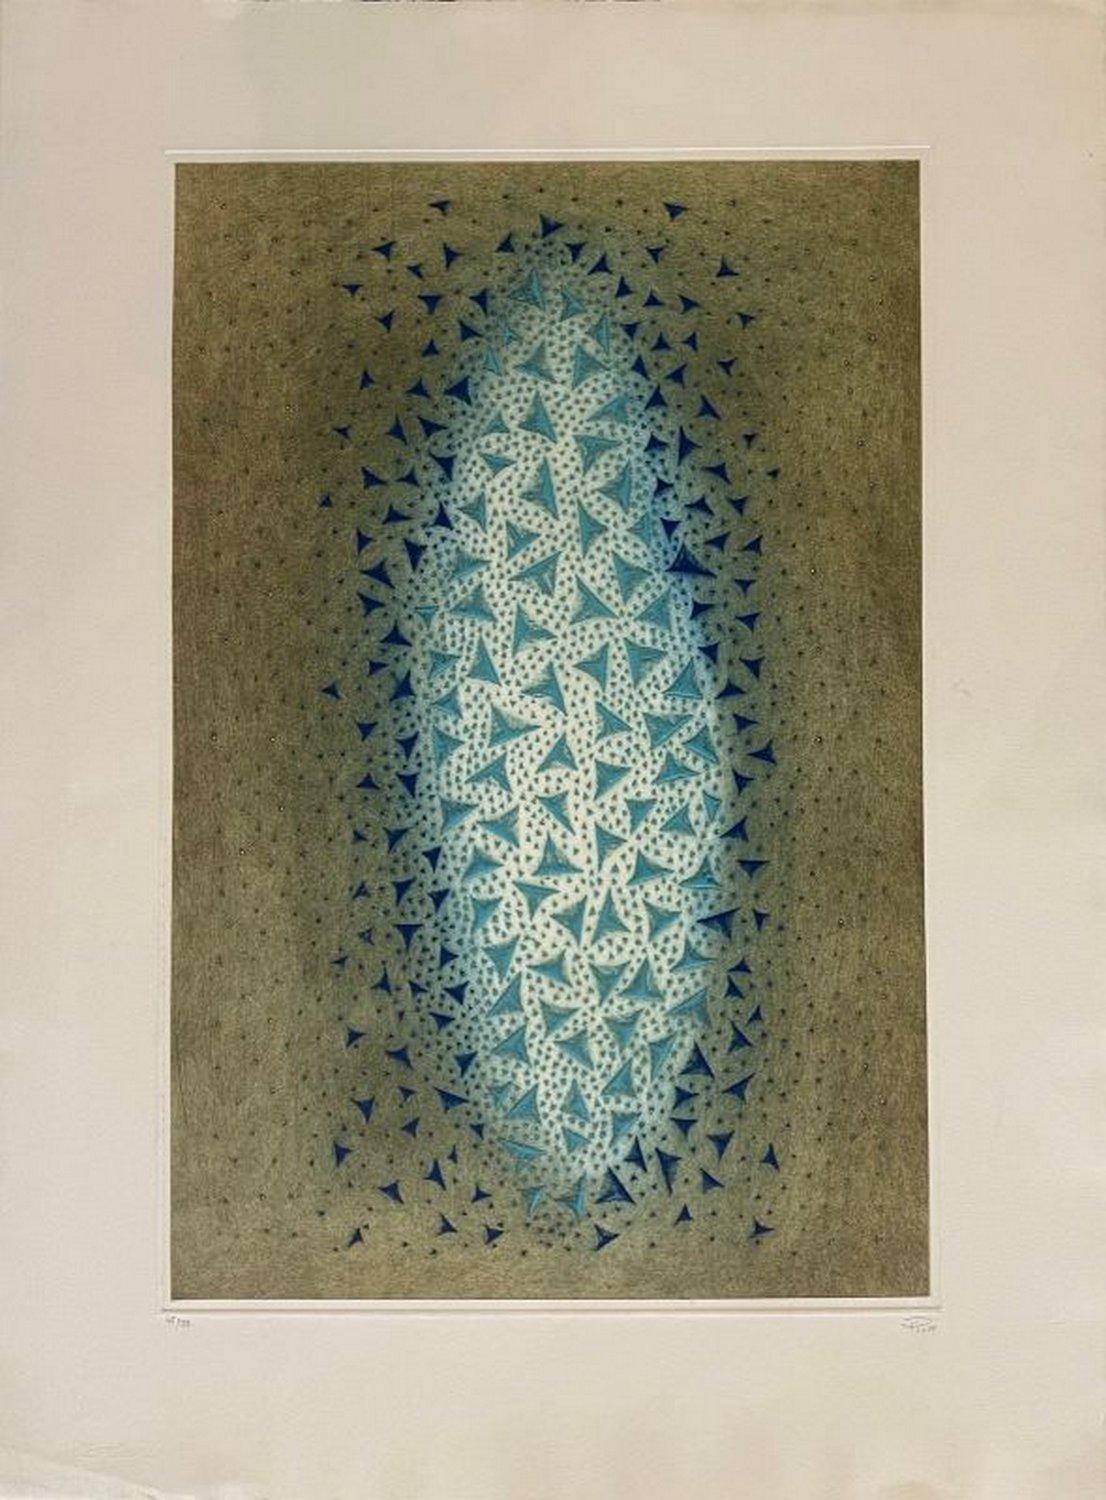 Abstract Print Arthur Luiz Piza - Paillettes de bleu 